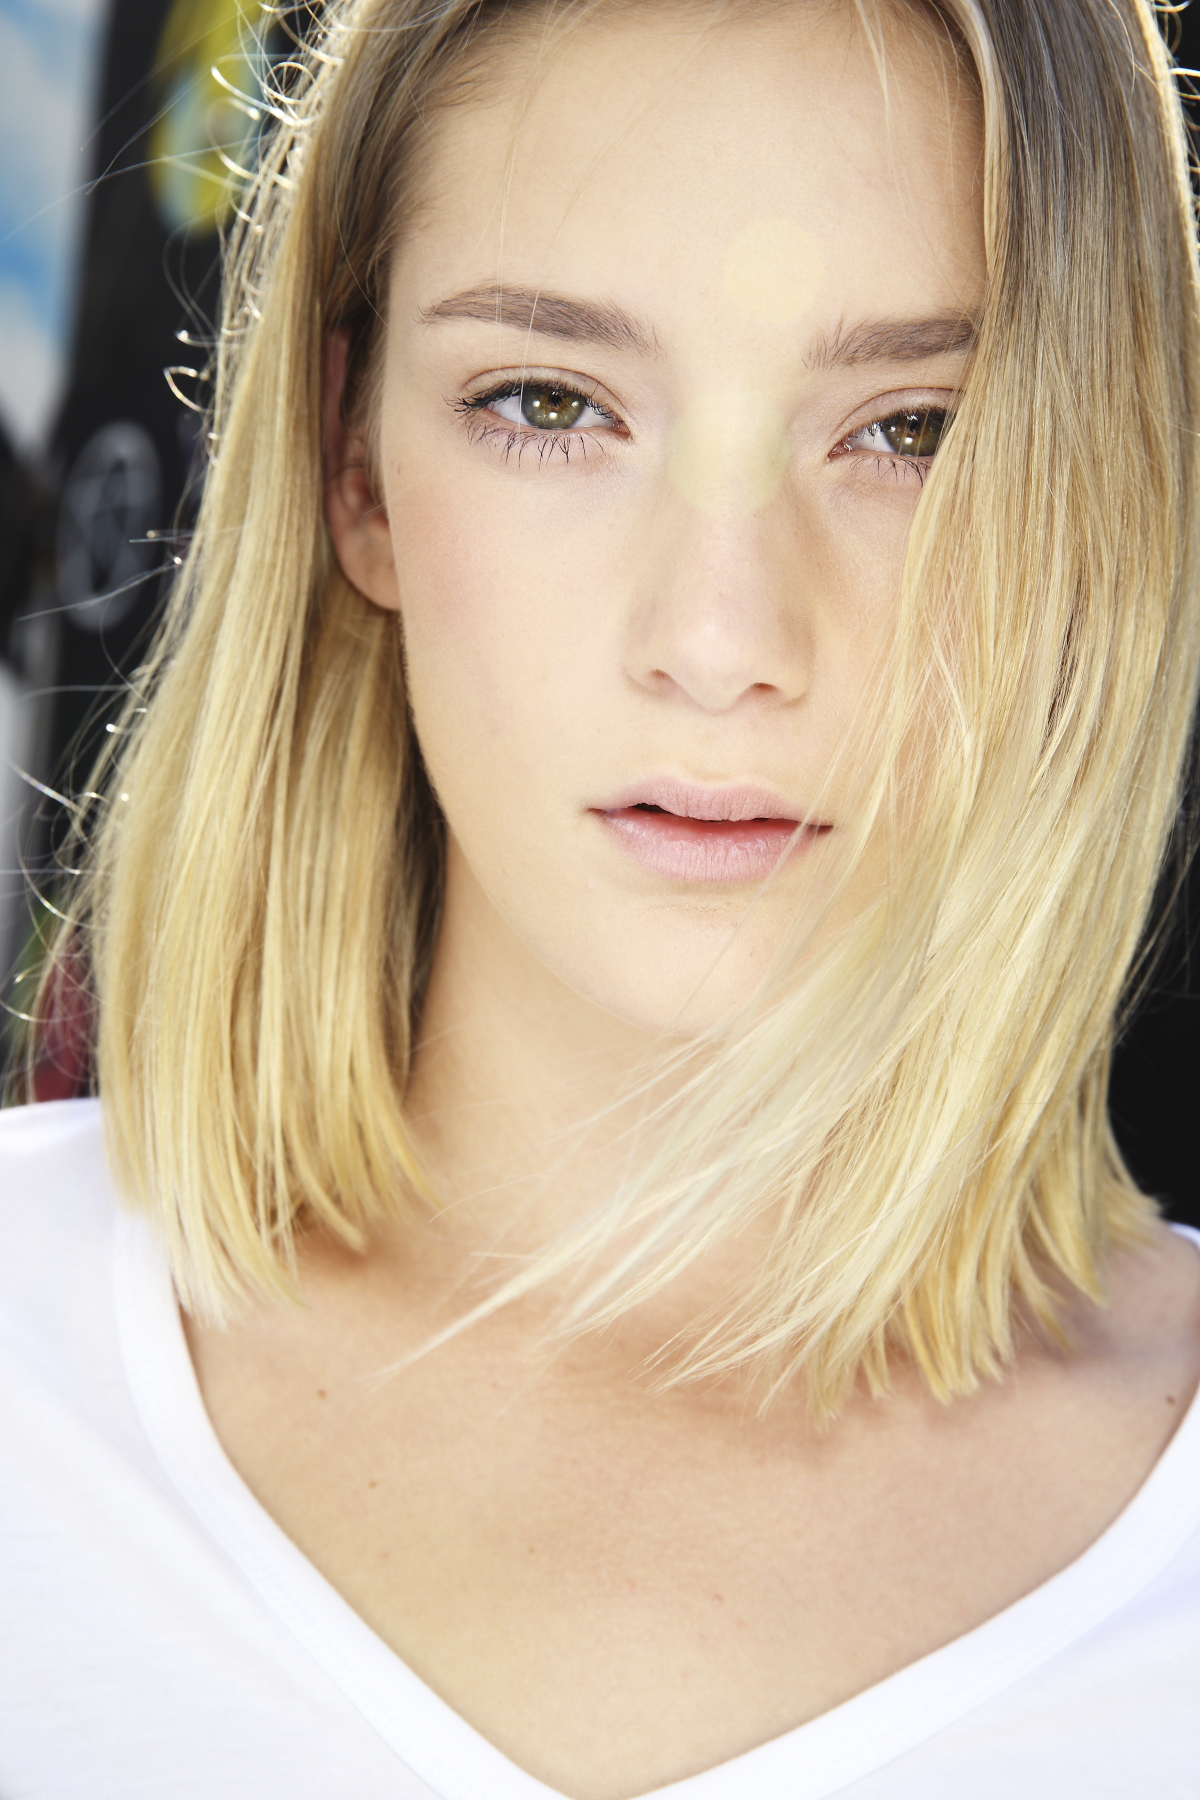 Lauren Feenstra from Priscillas Models Management